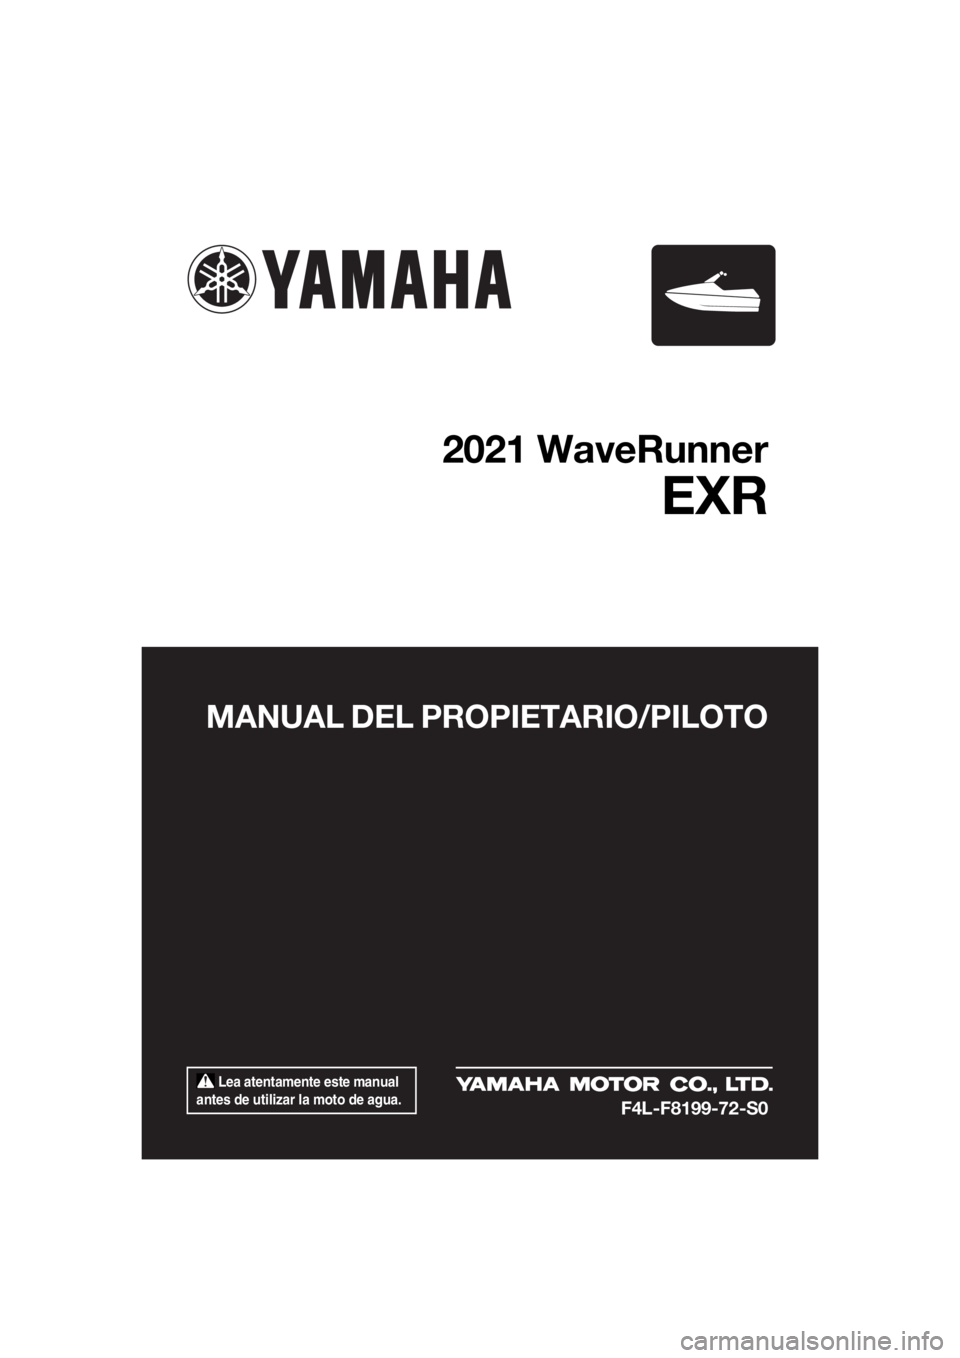 YAMAHA FJR1300 2021  Manuale de Empleo (in Spanish)  Lea atentamente este manual 
antes de utilizar la moto de agua.
MANUAL DEL PROPIETARIO/PILOTO
2021 WaveRunner
EXR
F4L-F8199-72-S0
UF4L72S0.book  Page 1  Friday, June 19, 2020  9:17 AM 